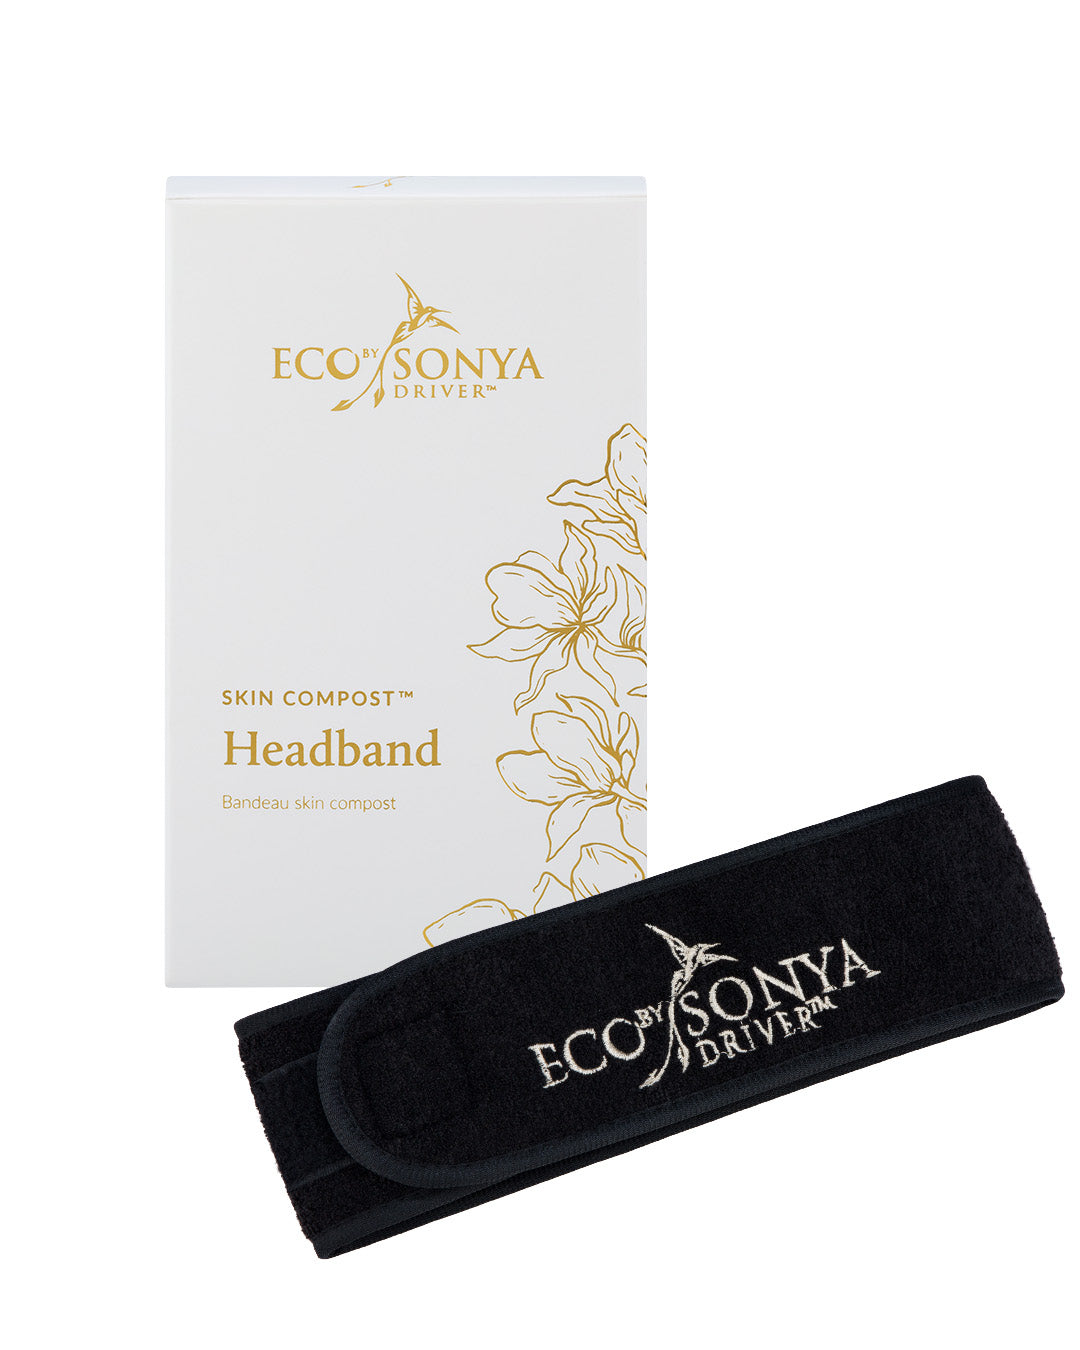 SKIN COMPOST™ HEADBAND, eco by Sonya skin compost headband, eco by sonya Nourished, Eco by Sonya Nederland, Eco Tan Nederland, Eco Tan Europe